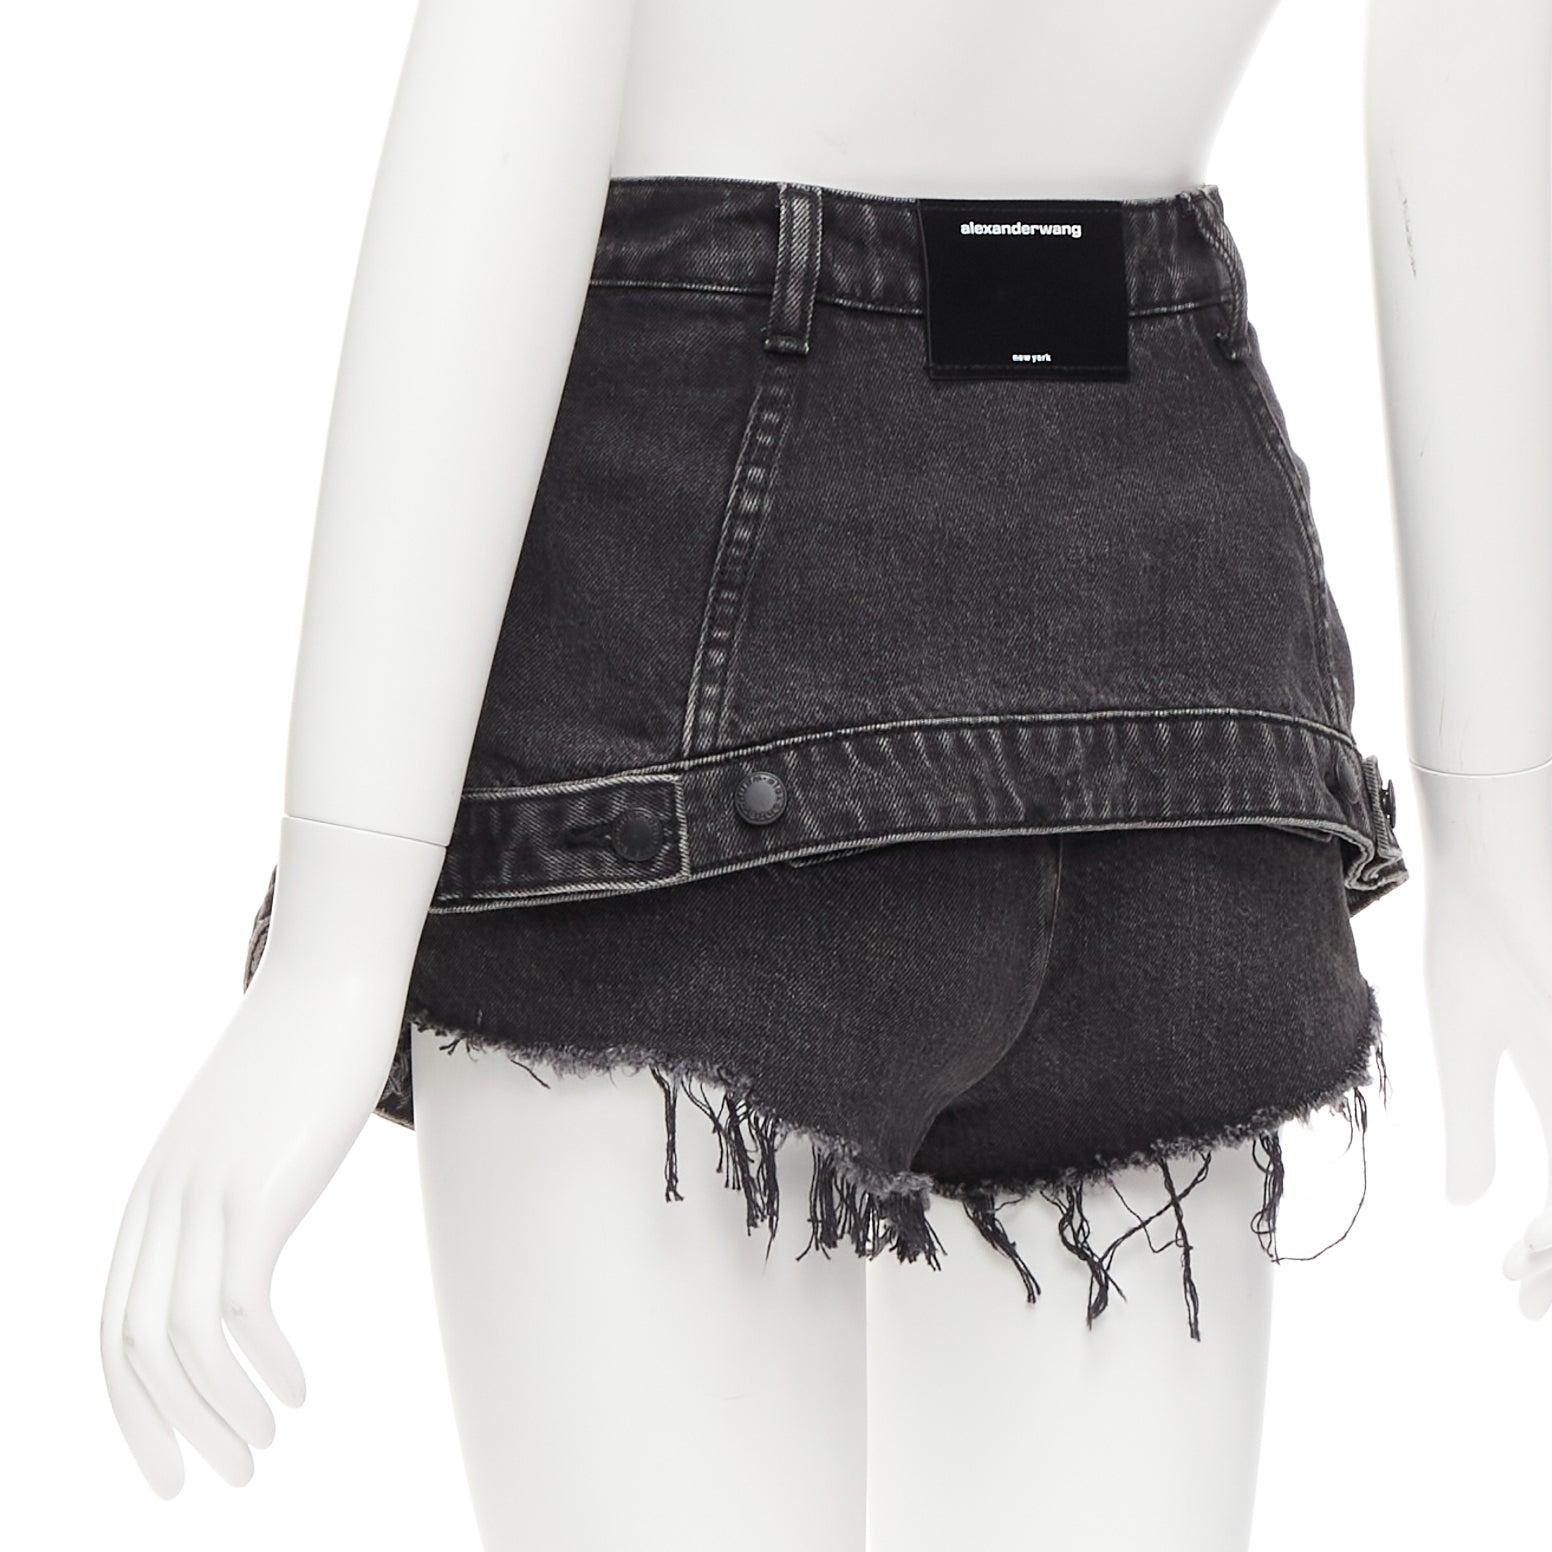 ALEXANDER WANG black washed cotton layered skort high waist cutaway shorts 25